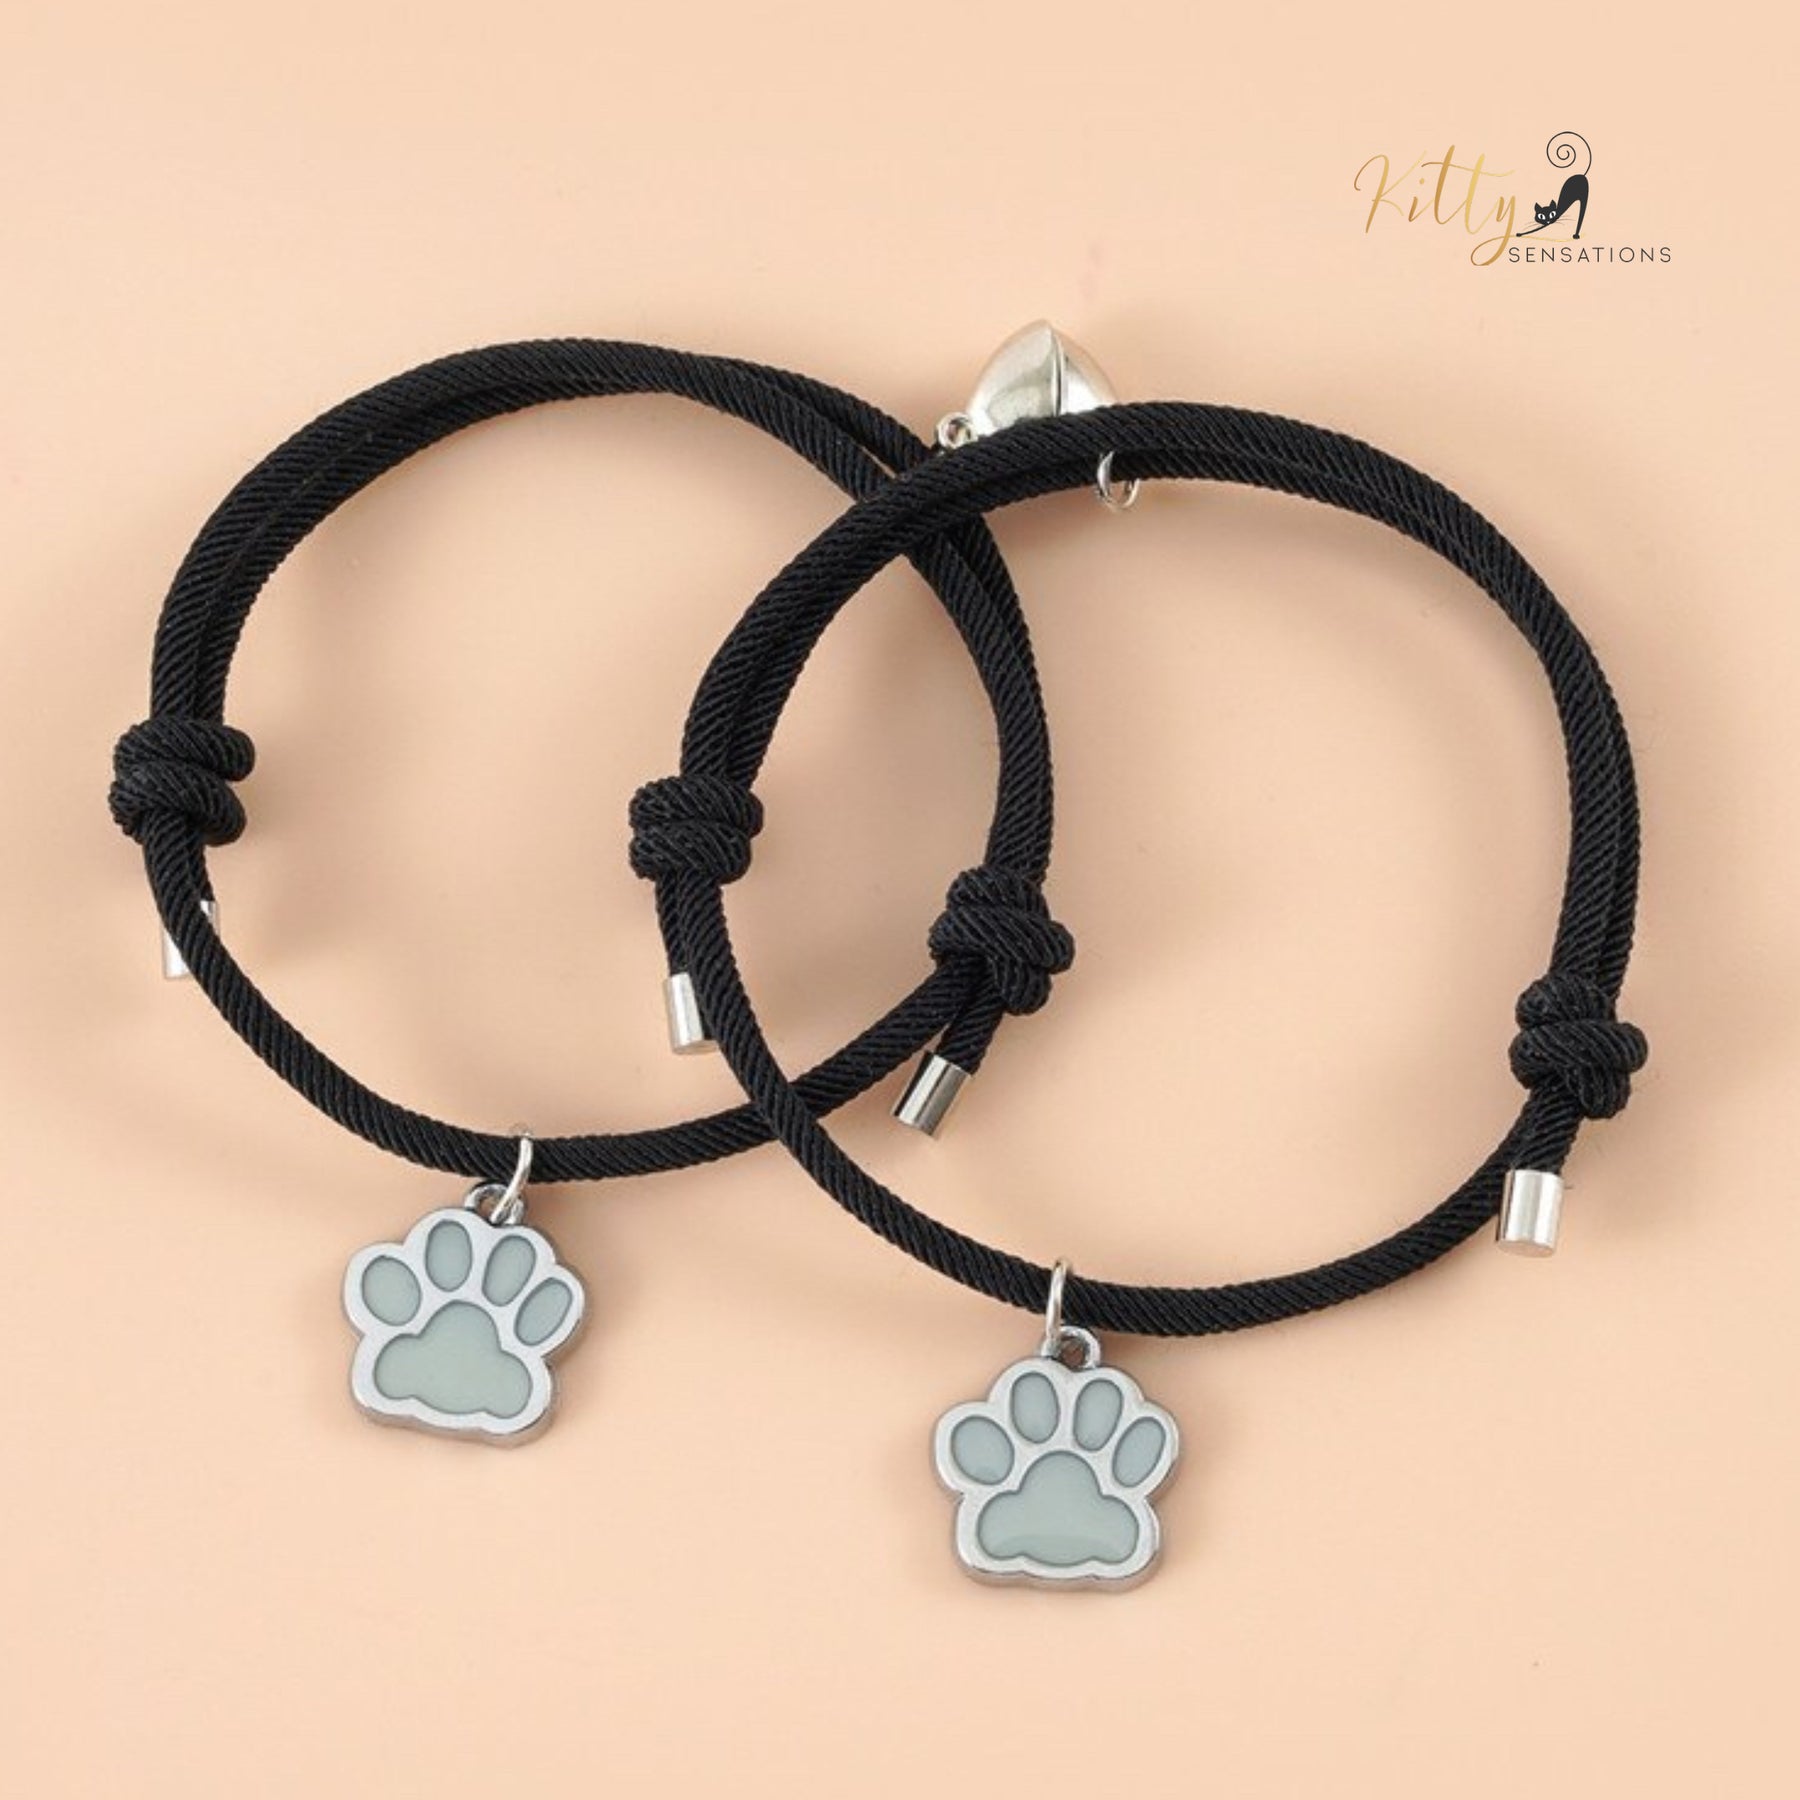 www.KittySensations.com Magnetic Heart, Glow-In-The-Dark Cat Paw, Couple/Friends Bracelet Set (Au Pair) - Adjustable Size ($16.53): https://www.kittysensations.com/products/magnetic-heart-glow-in-the-dark-cat-paw-couple-bracelets-au-pair